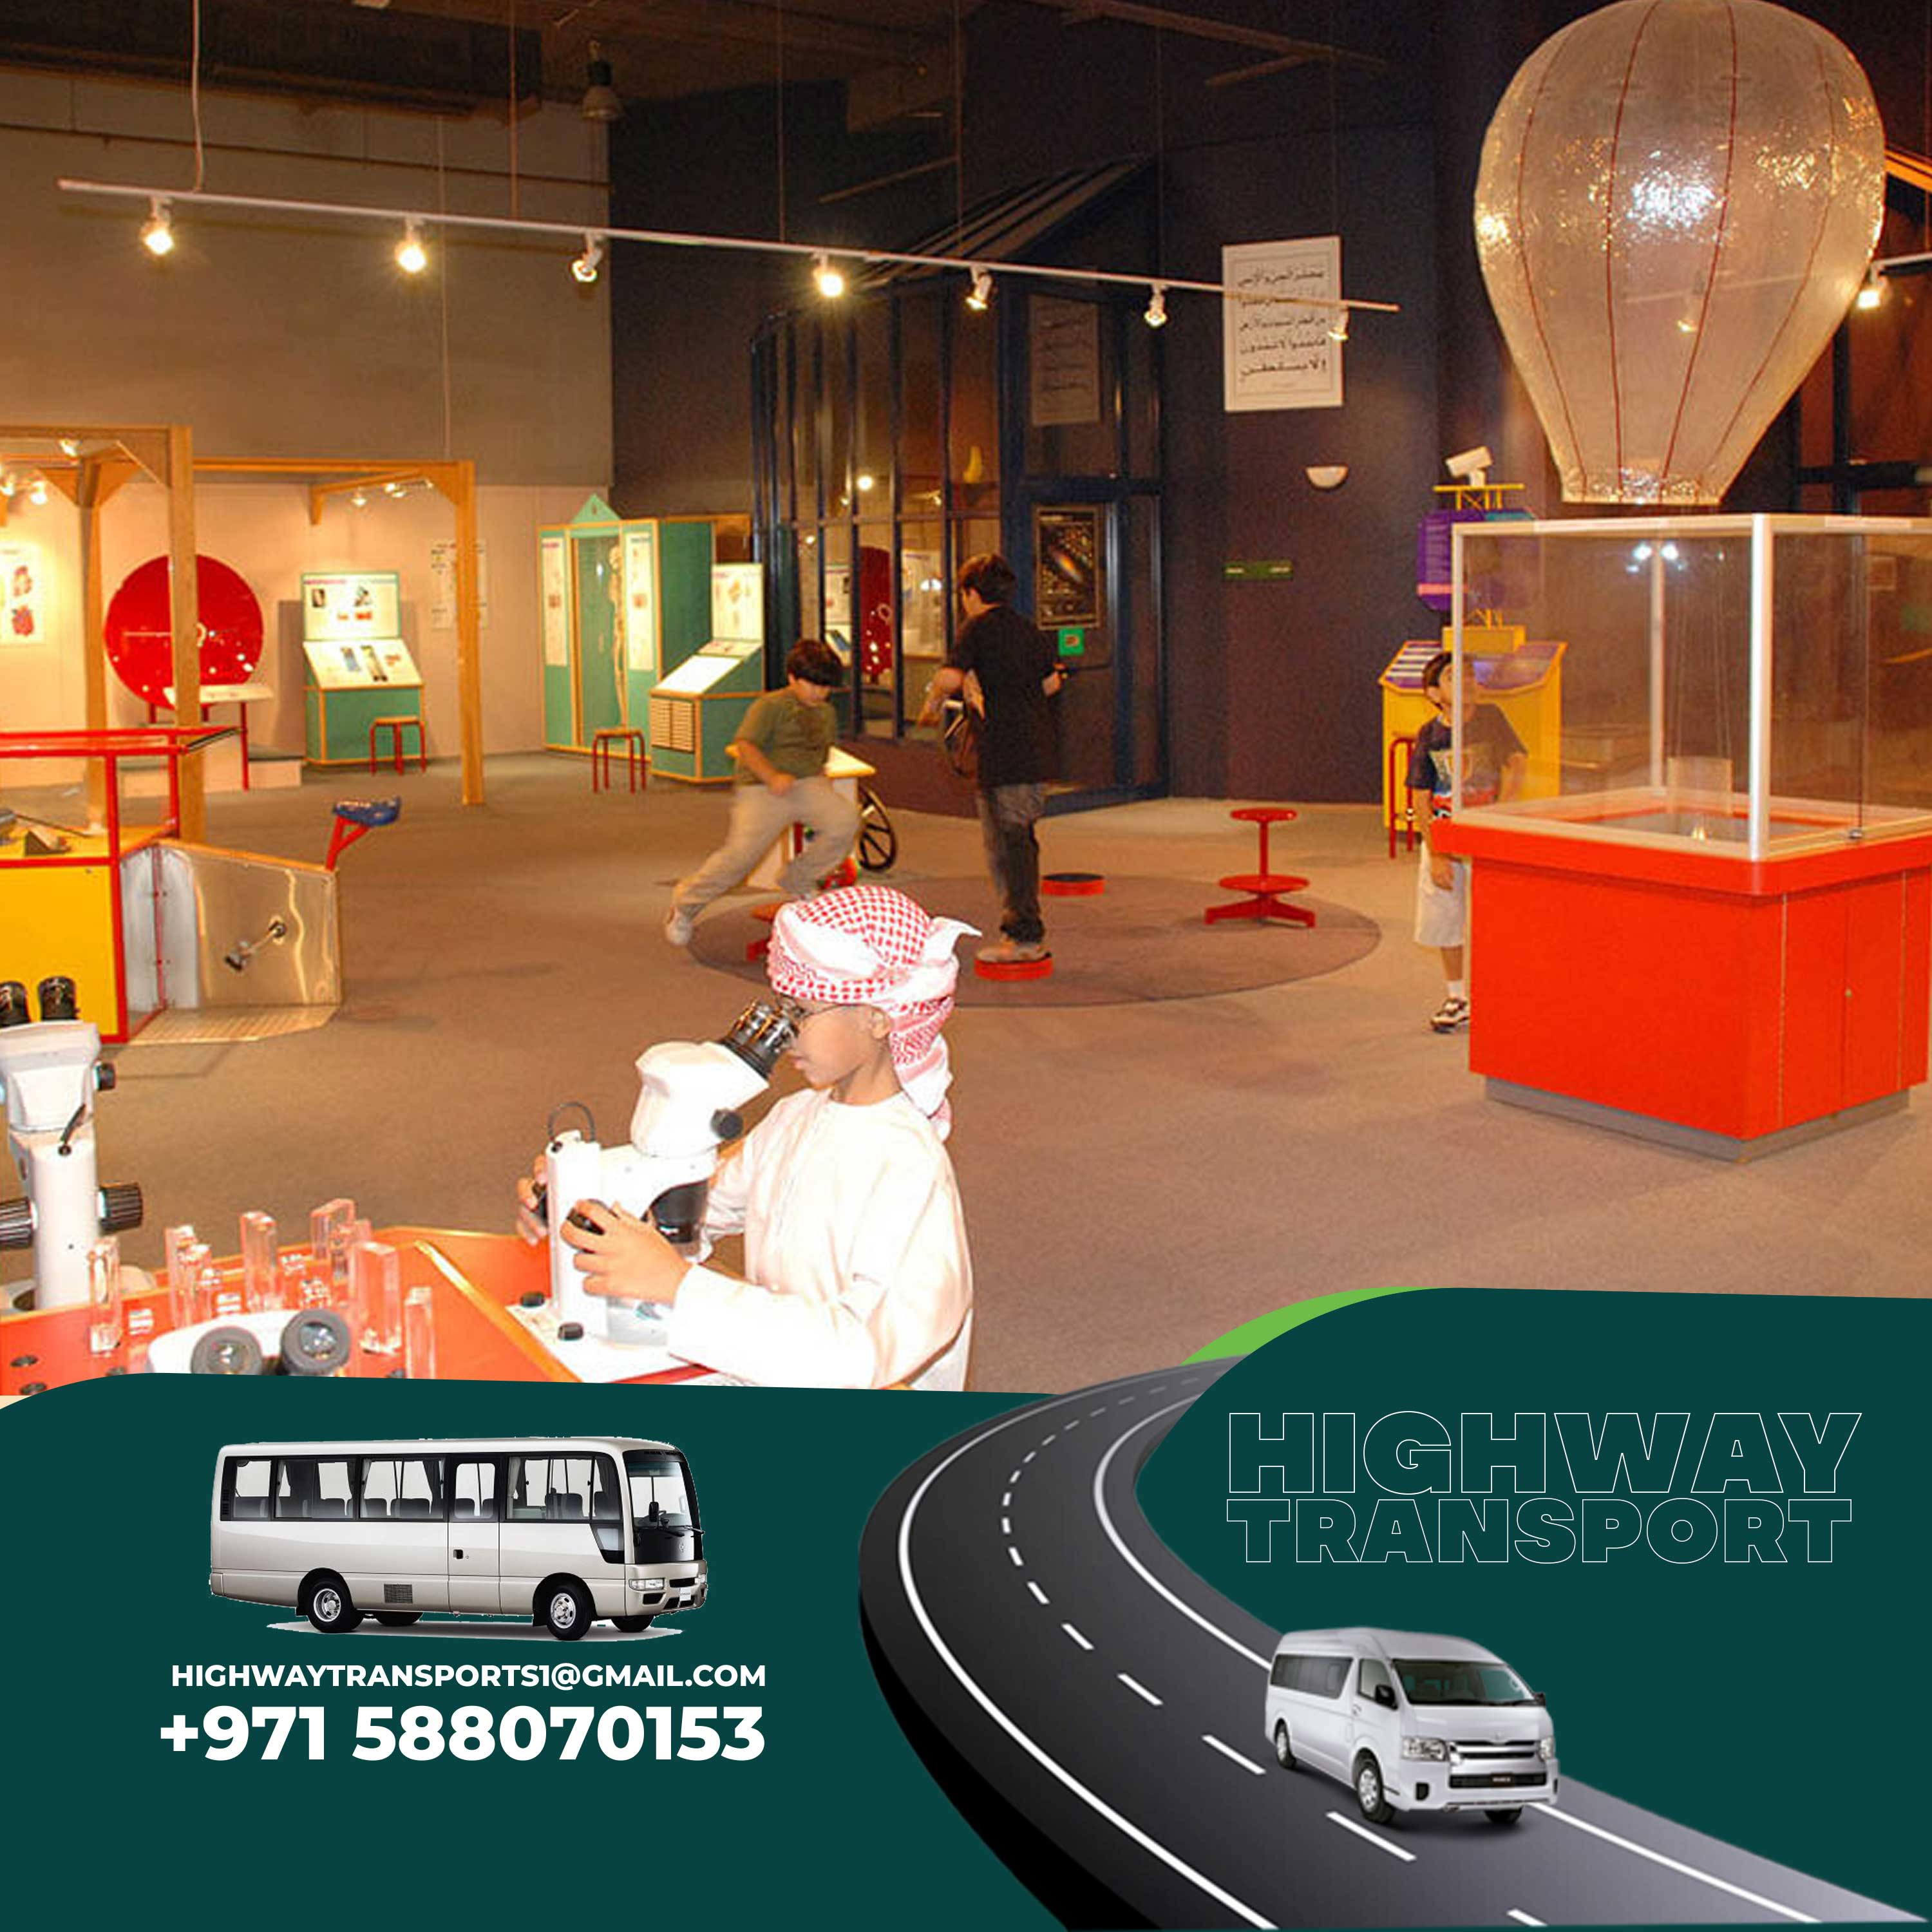 Interior of Sharjah Science Museum showcasing interactive exhibits for children